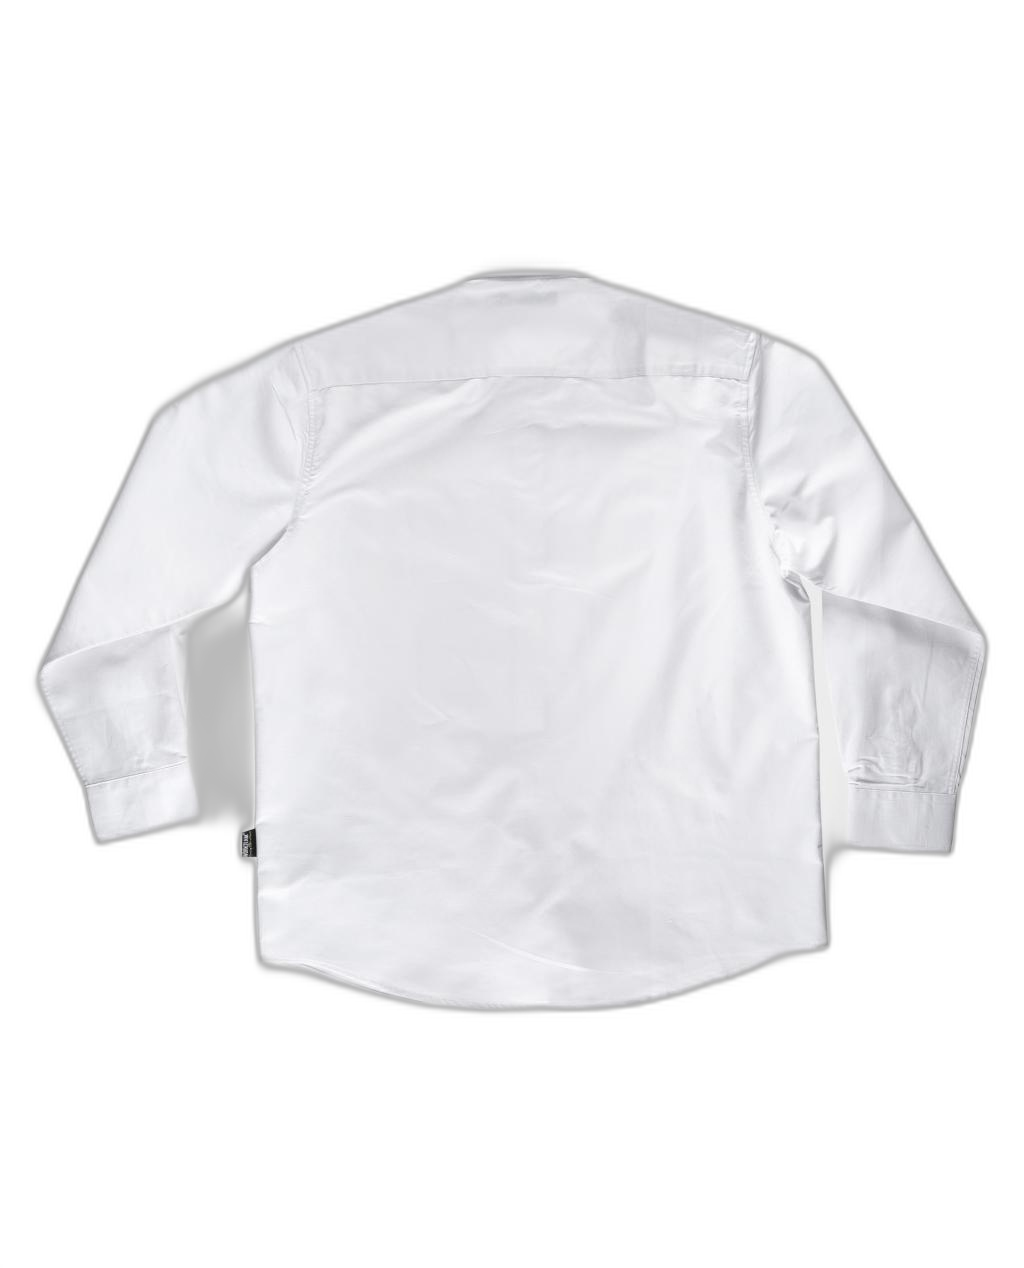 Camisa de manga larga con un bolso de pecho tejido oxford WORKTEAM B8400